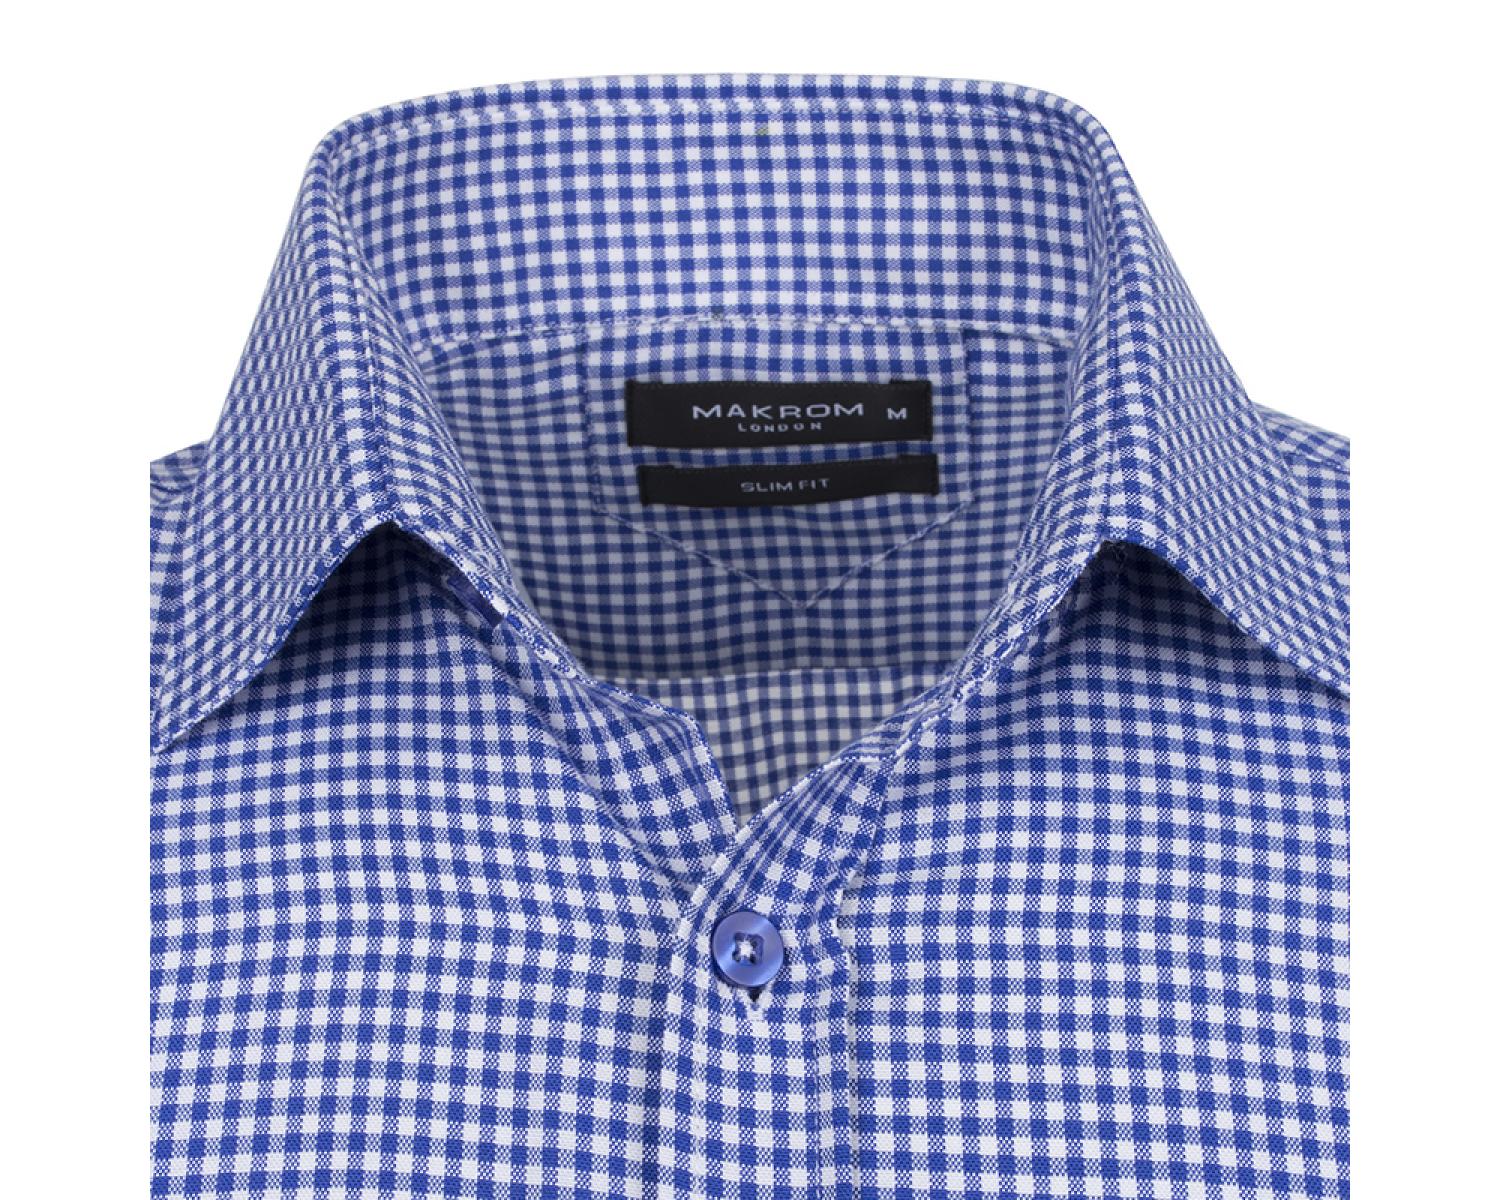 Мужские рубашки производство. Рубашка Томми Хилфигер в клетку. Pimlico Blue рубашка мужская. Рубашка Томми Хилфигер мужская в клетку. Рубашка мужская iv71846.